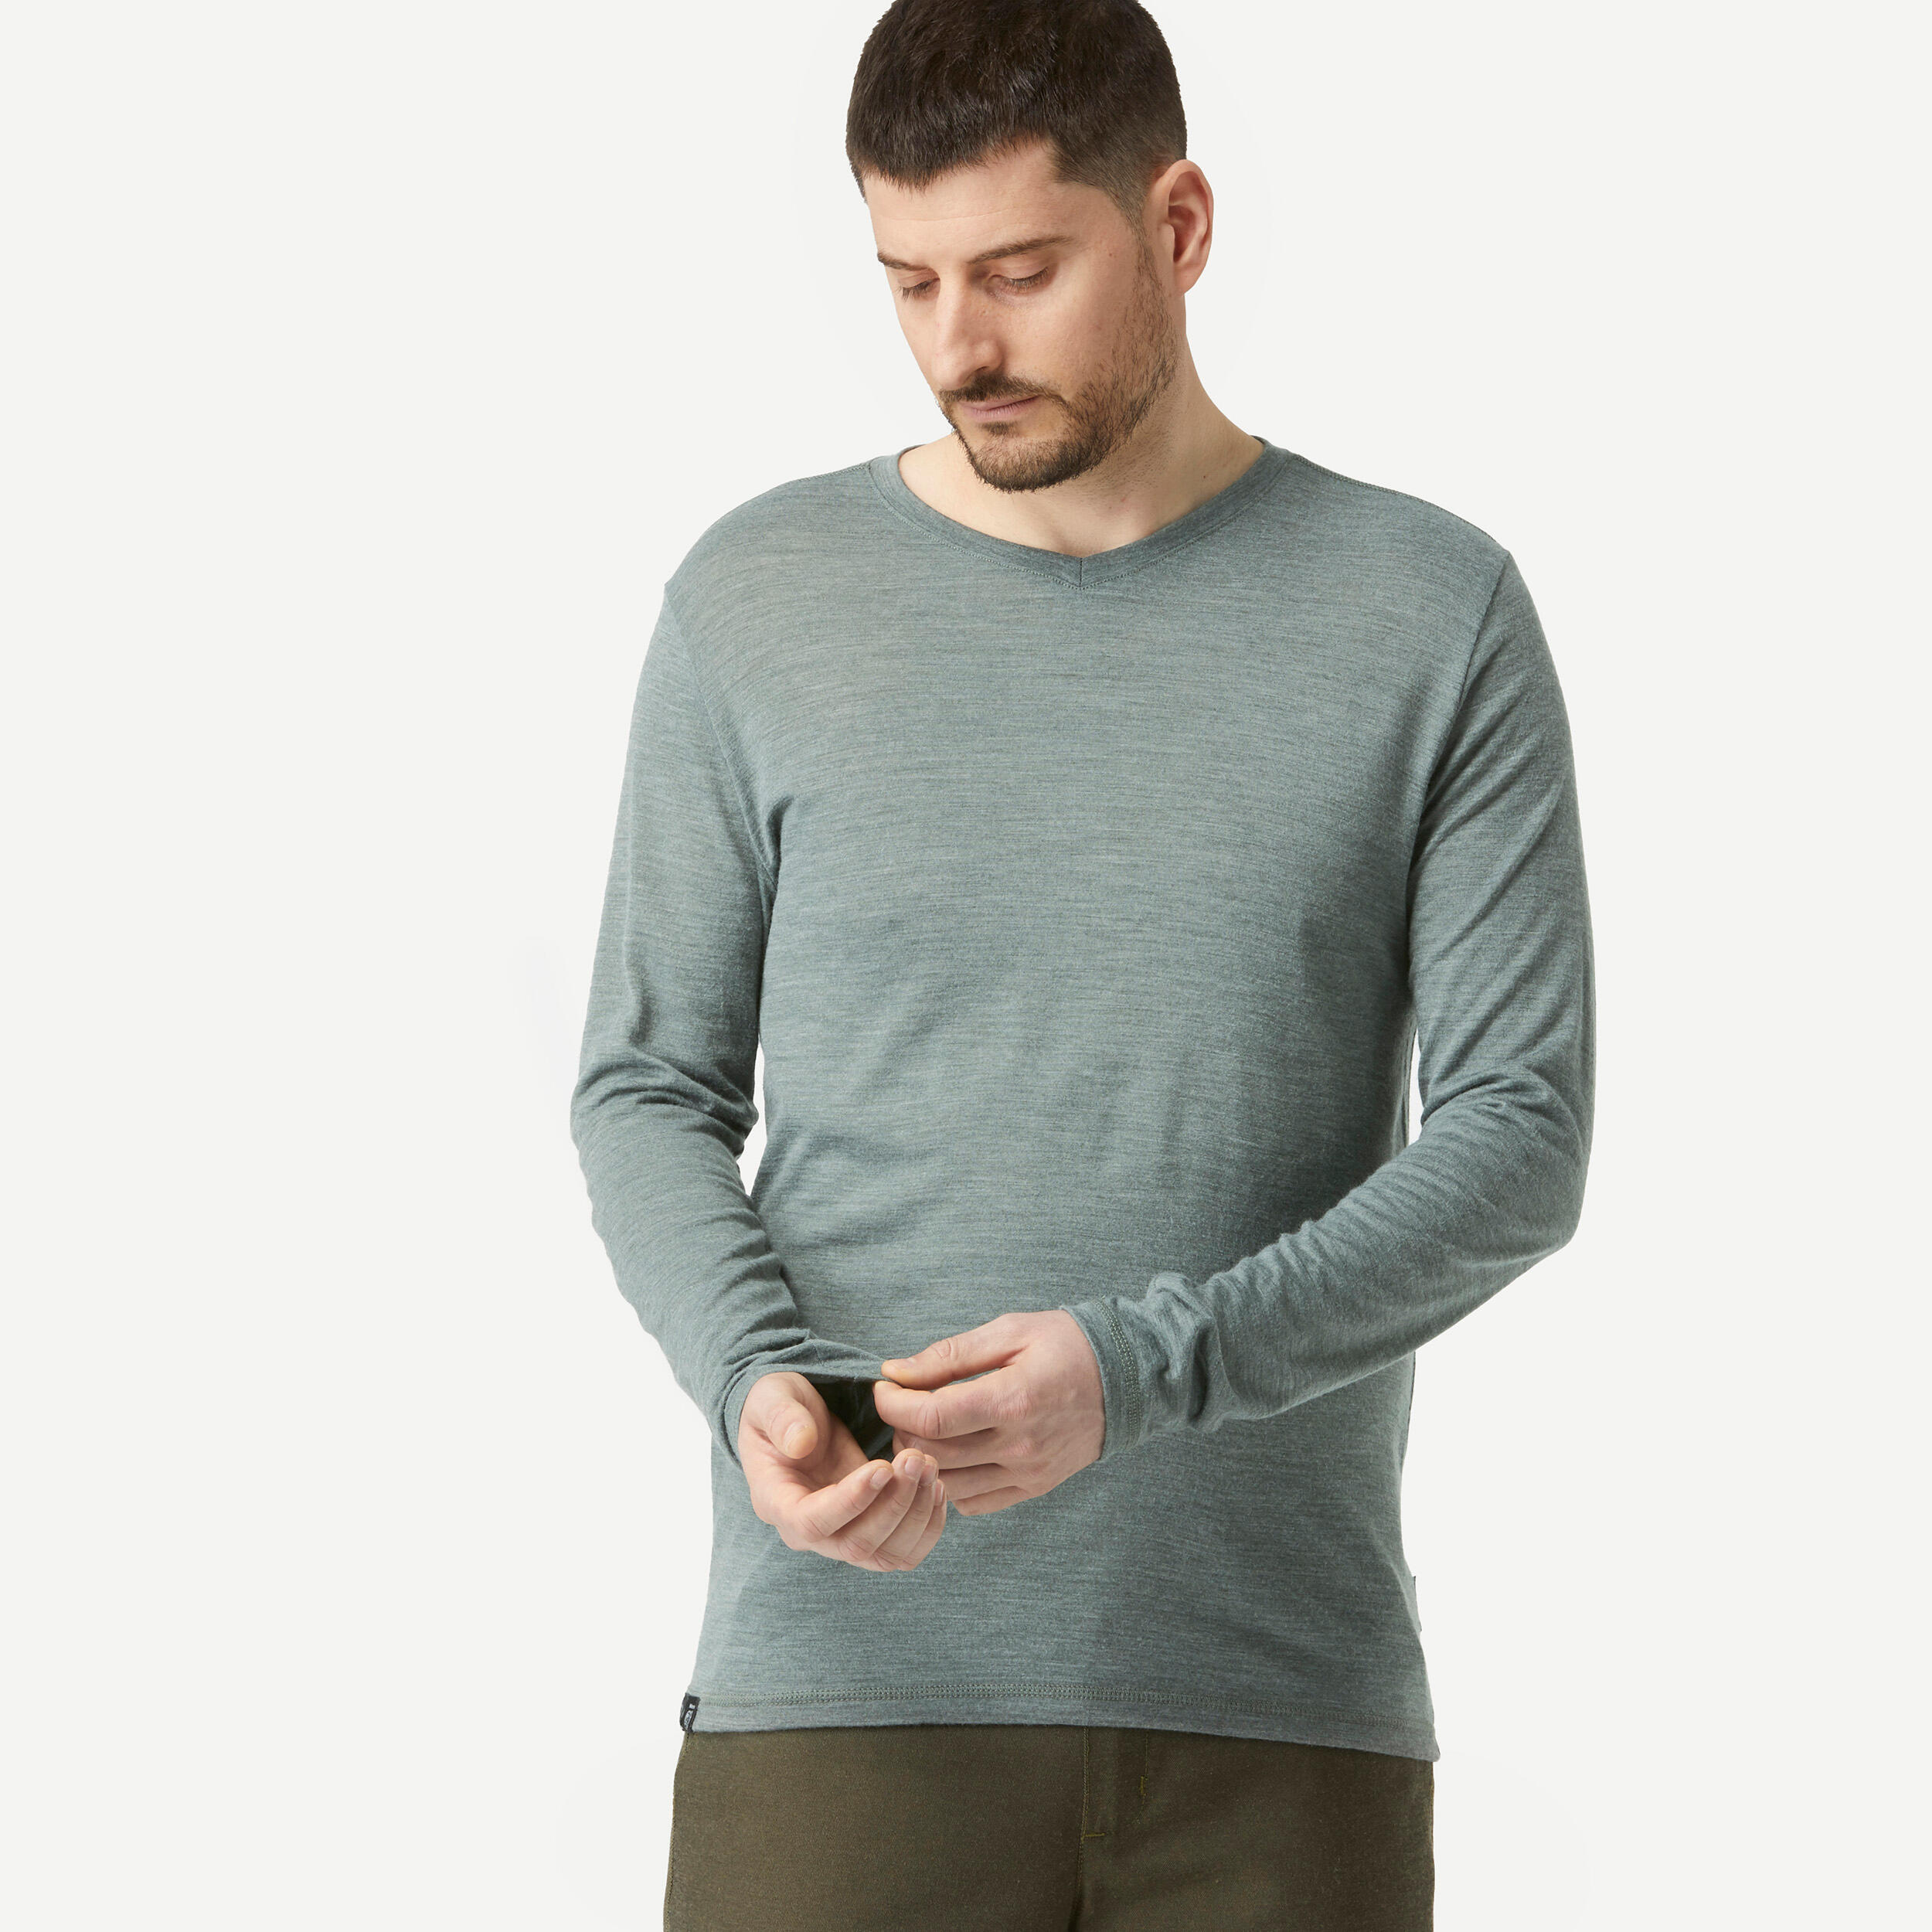 Men's long-sleeved Merino wool trekking t-shirt - TRAVEL 500 - Khaki 2/6